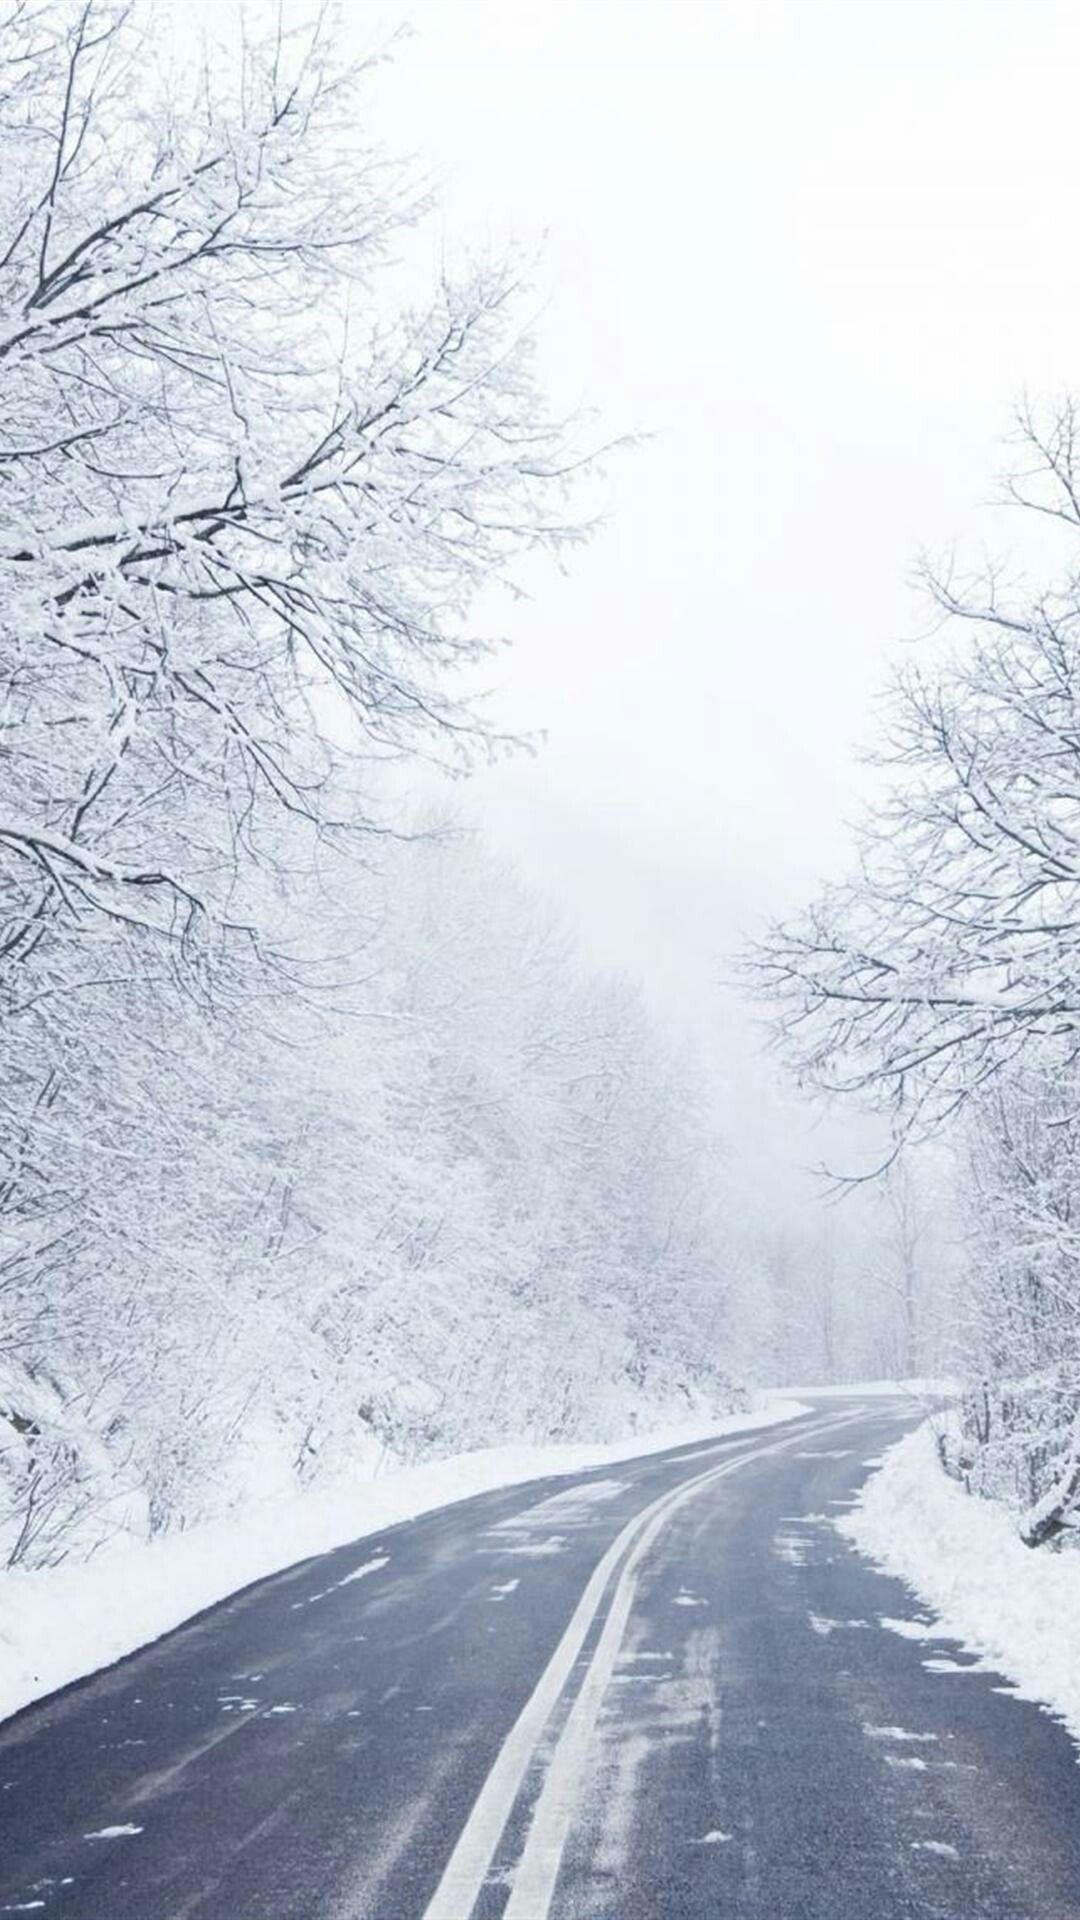 Snowy Road. Christmas wallpaper iphone tumblr